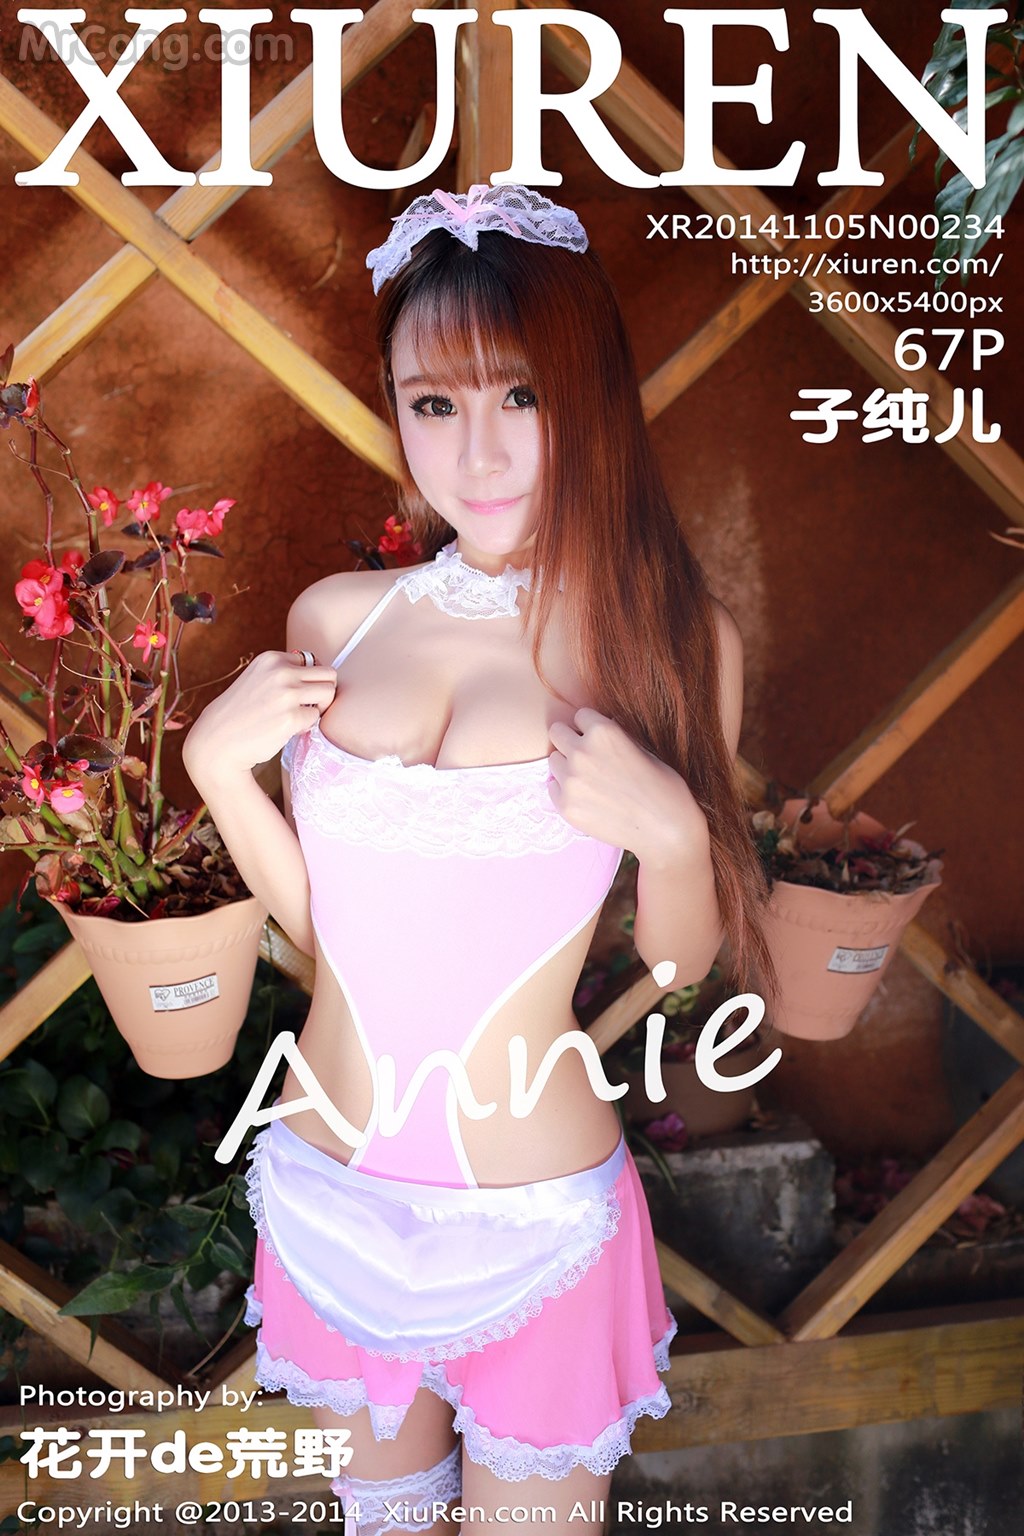 XIUREN No. 2234: Model Annie (子 纯 儿) (68 photos) photo 1-0